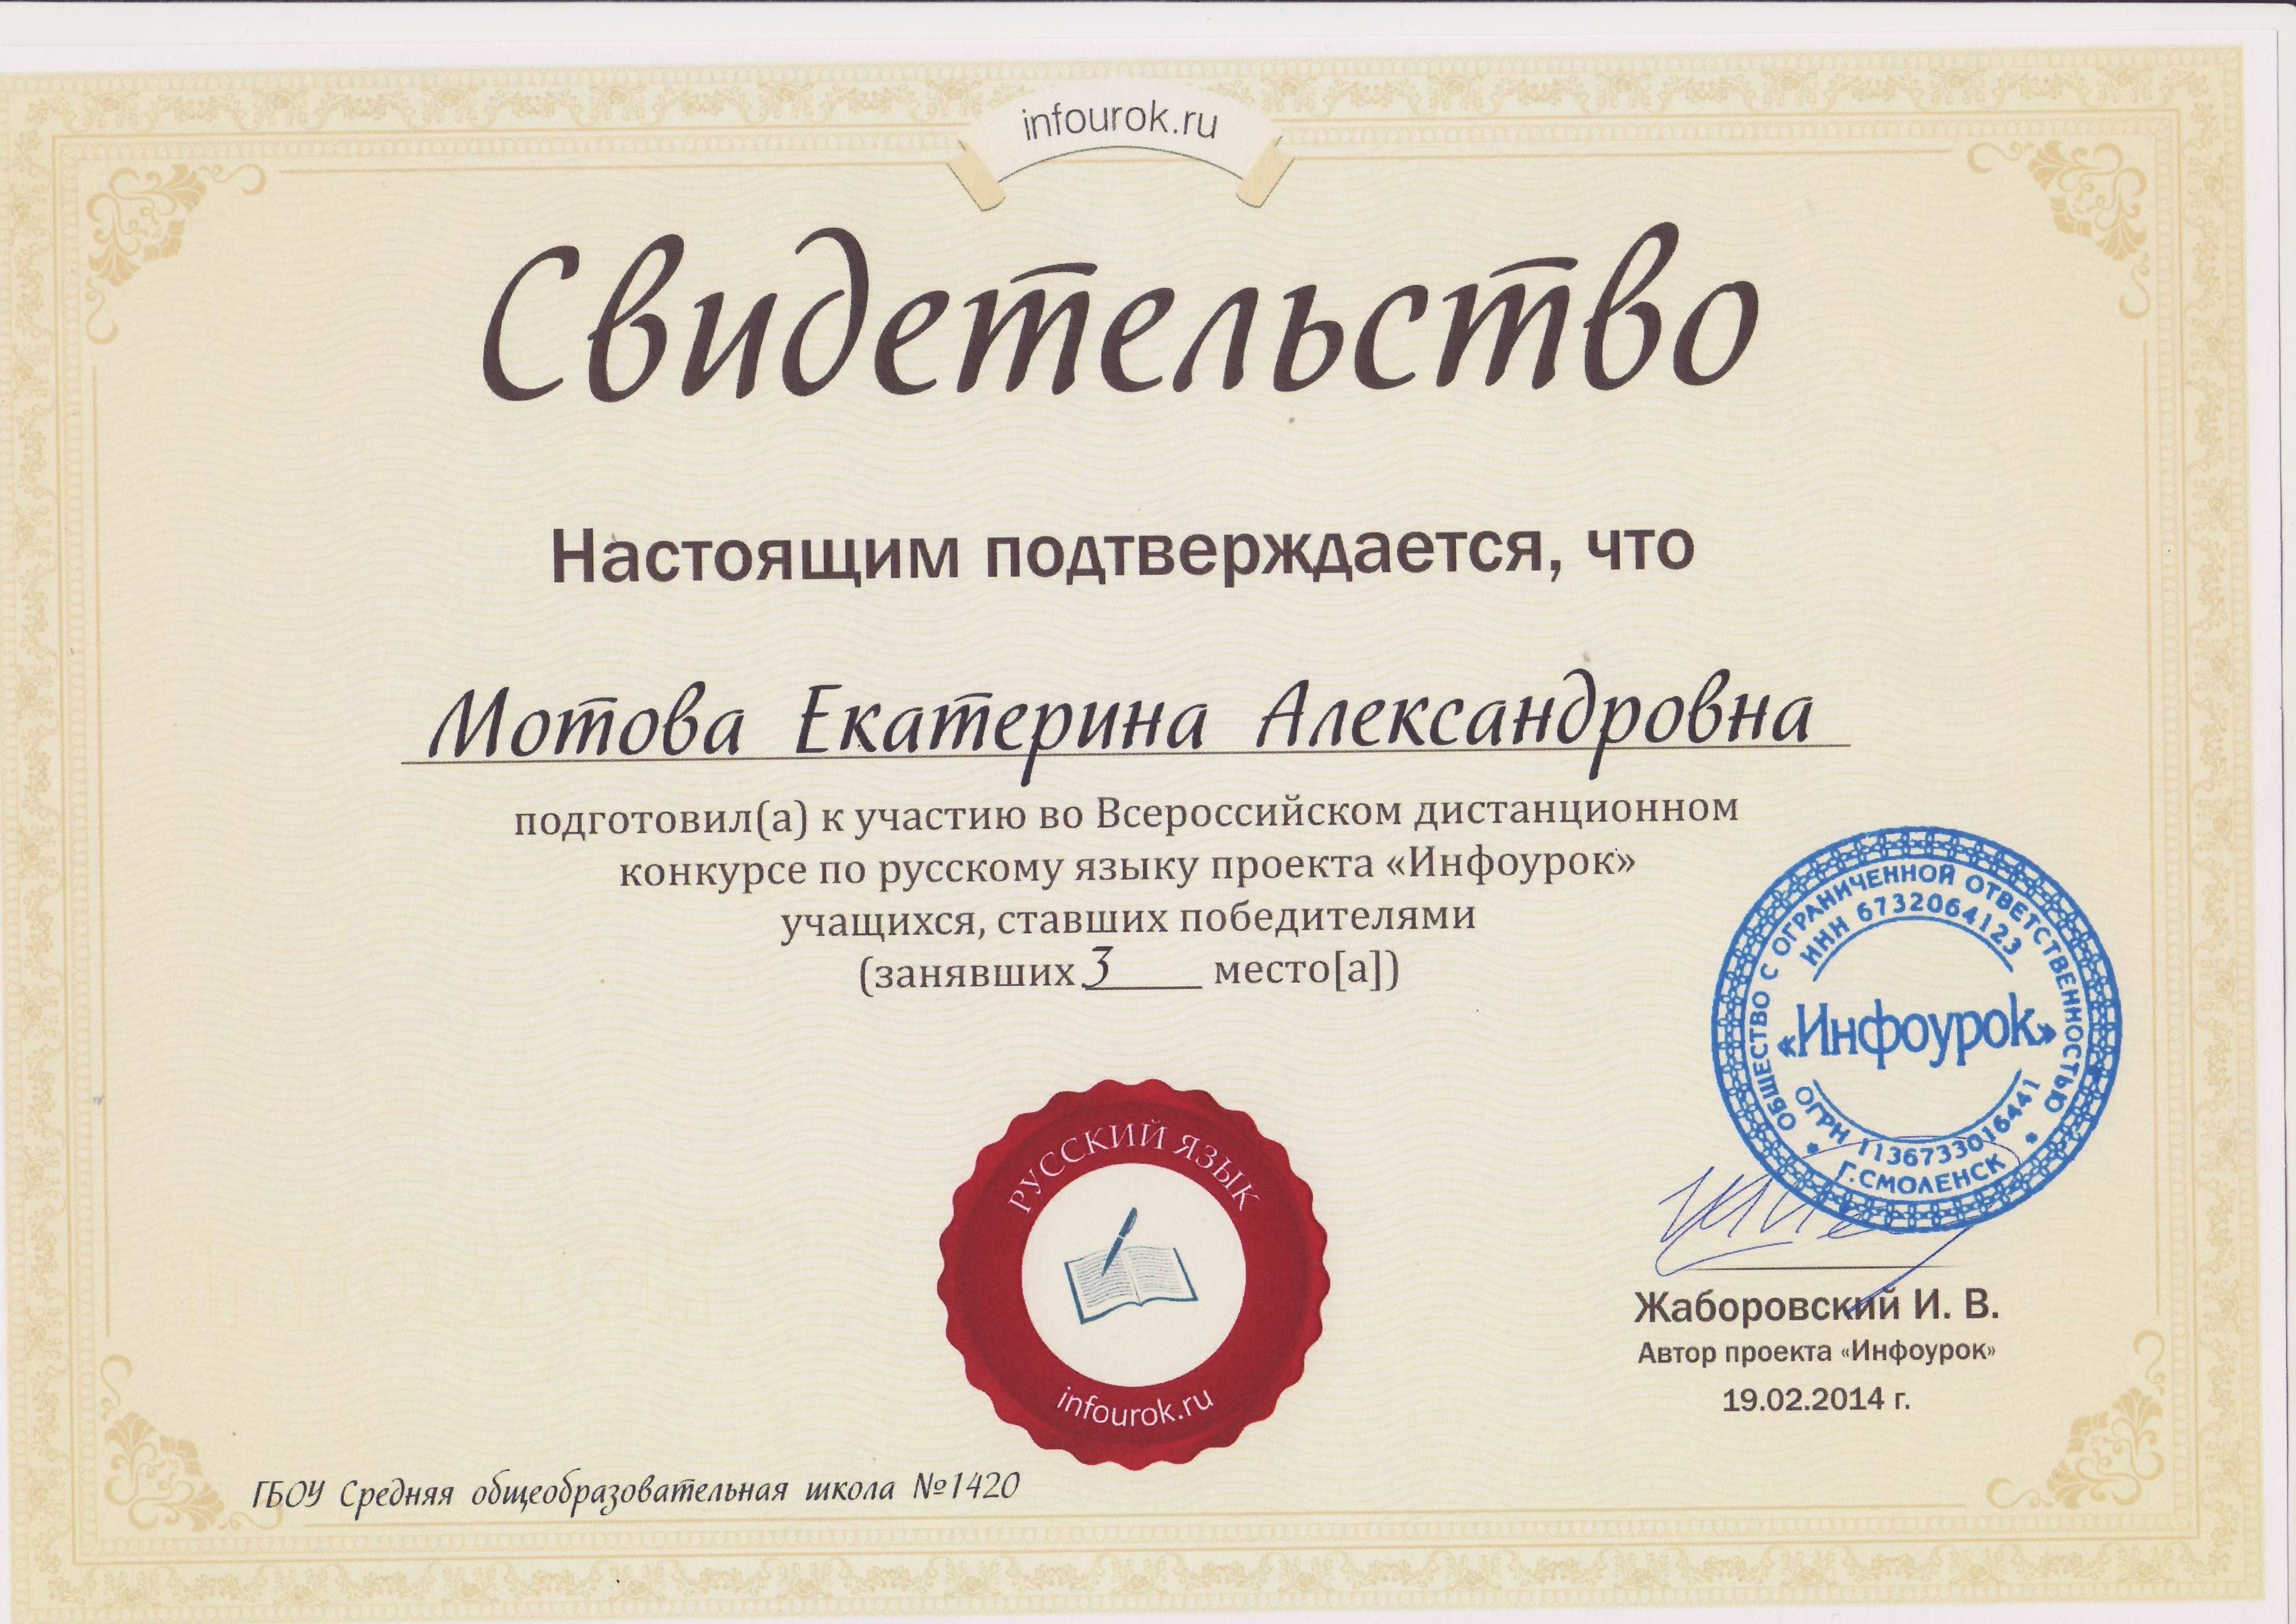 Infourok ru tests. Свидетельство Инфоурок. Сертификат Инфоурок. Сертификат о публикации учителя информатики. Инфоурок дипломы сертификаты.